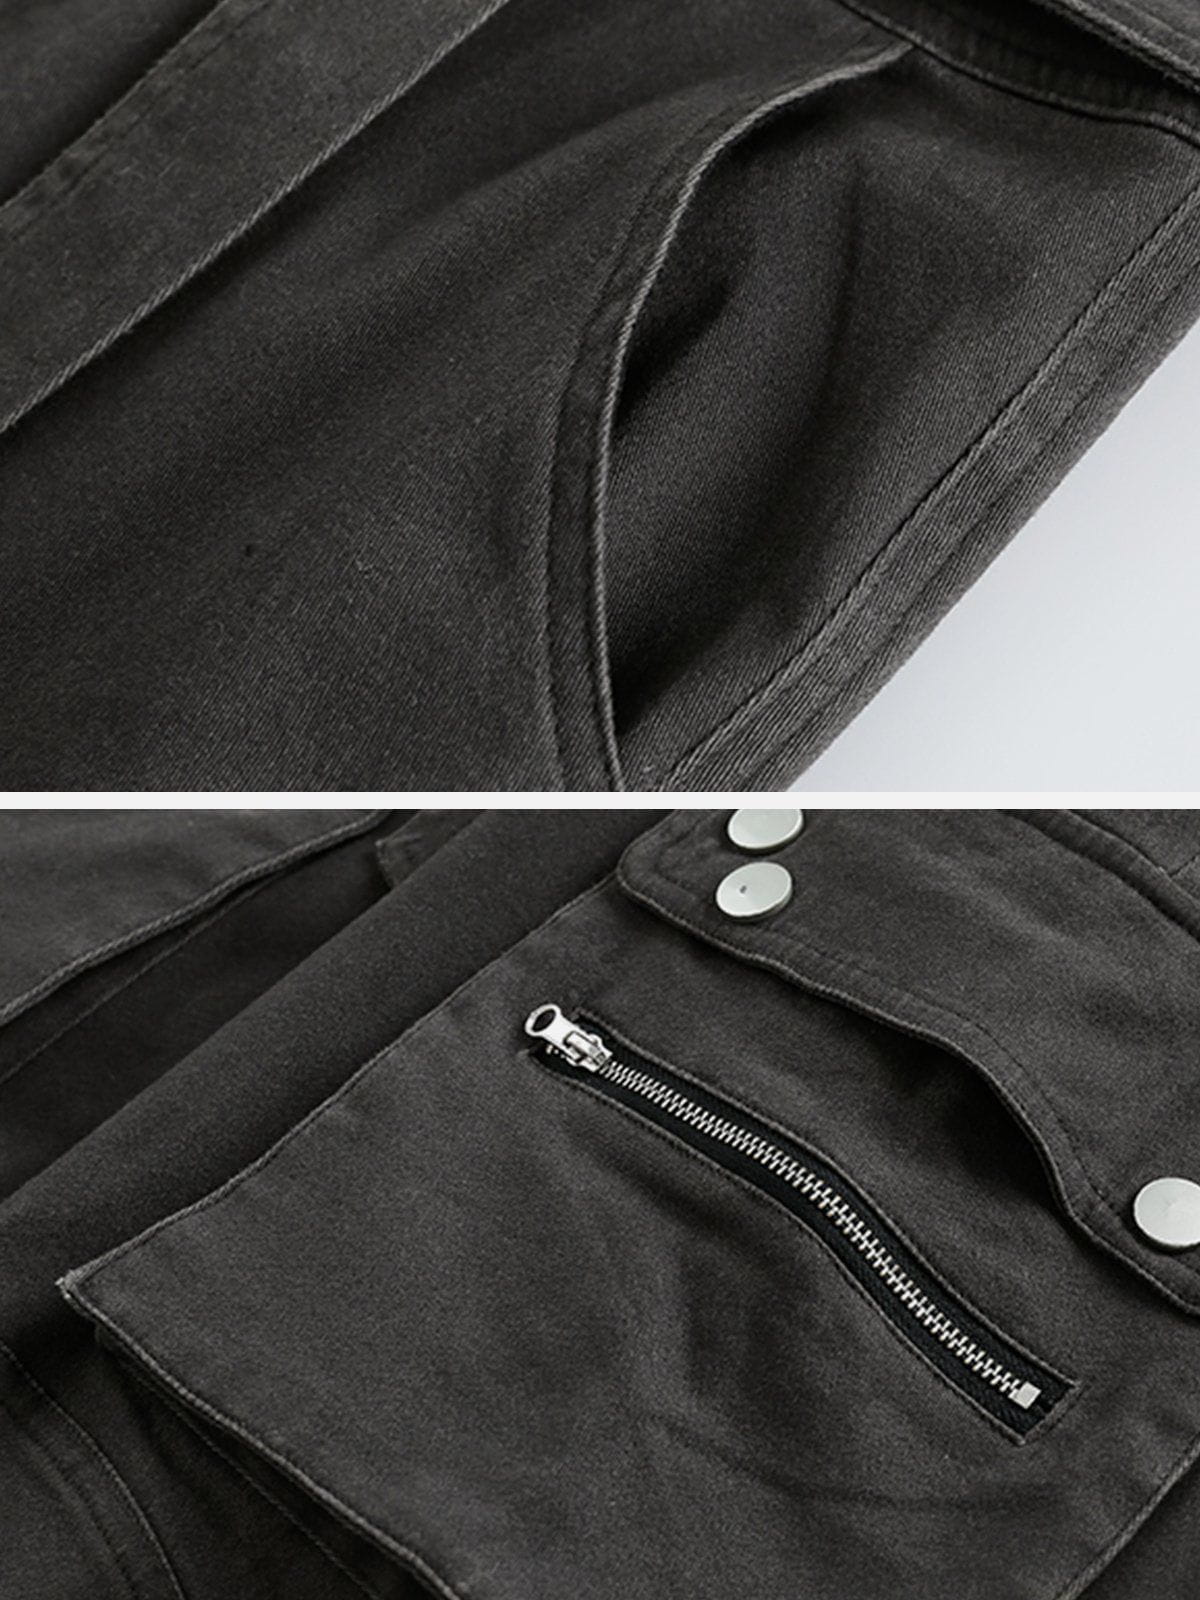 Majesda® - Waistband Multi-Pocket Cargo Pants outfit ideas streetwear fashion